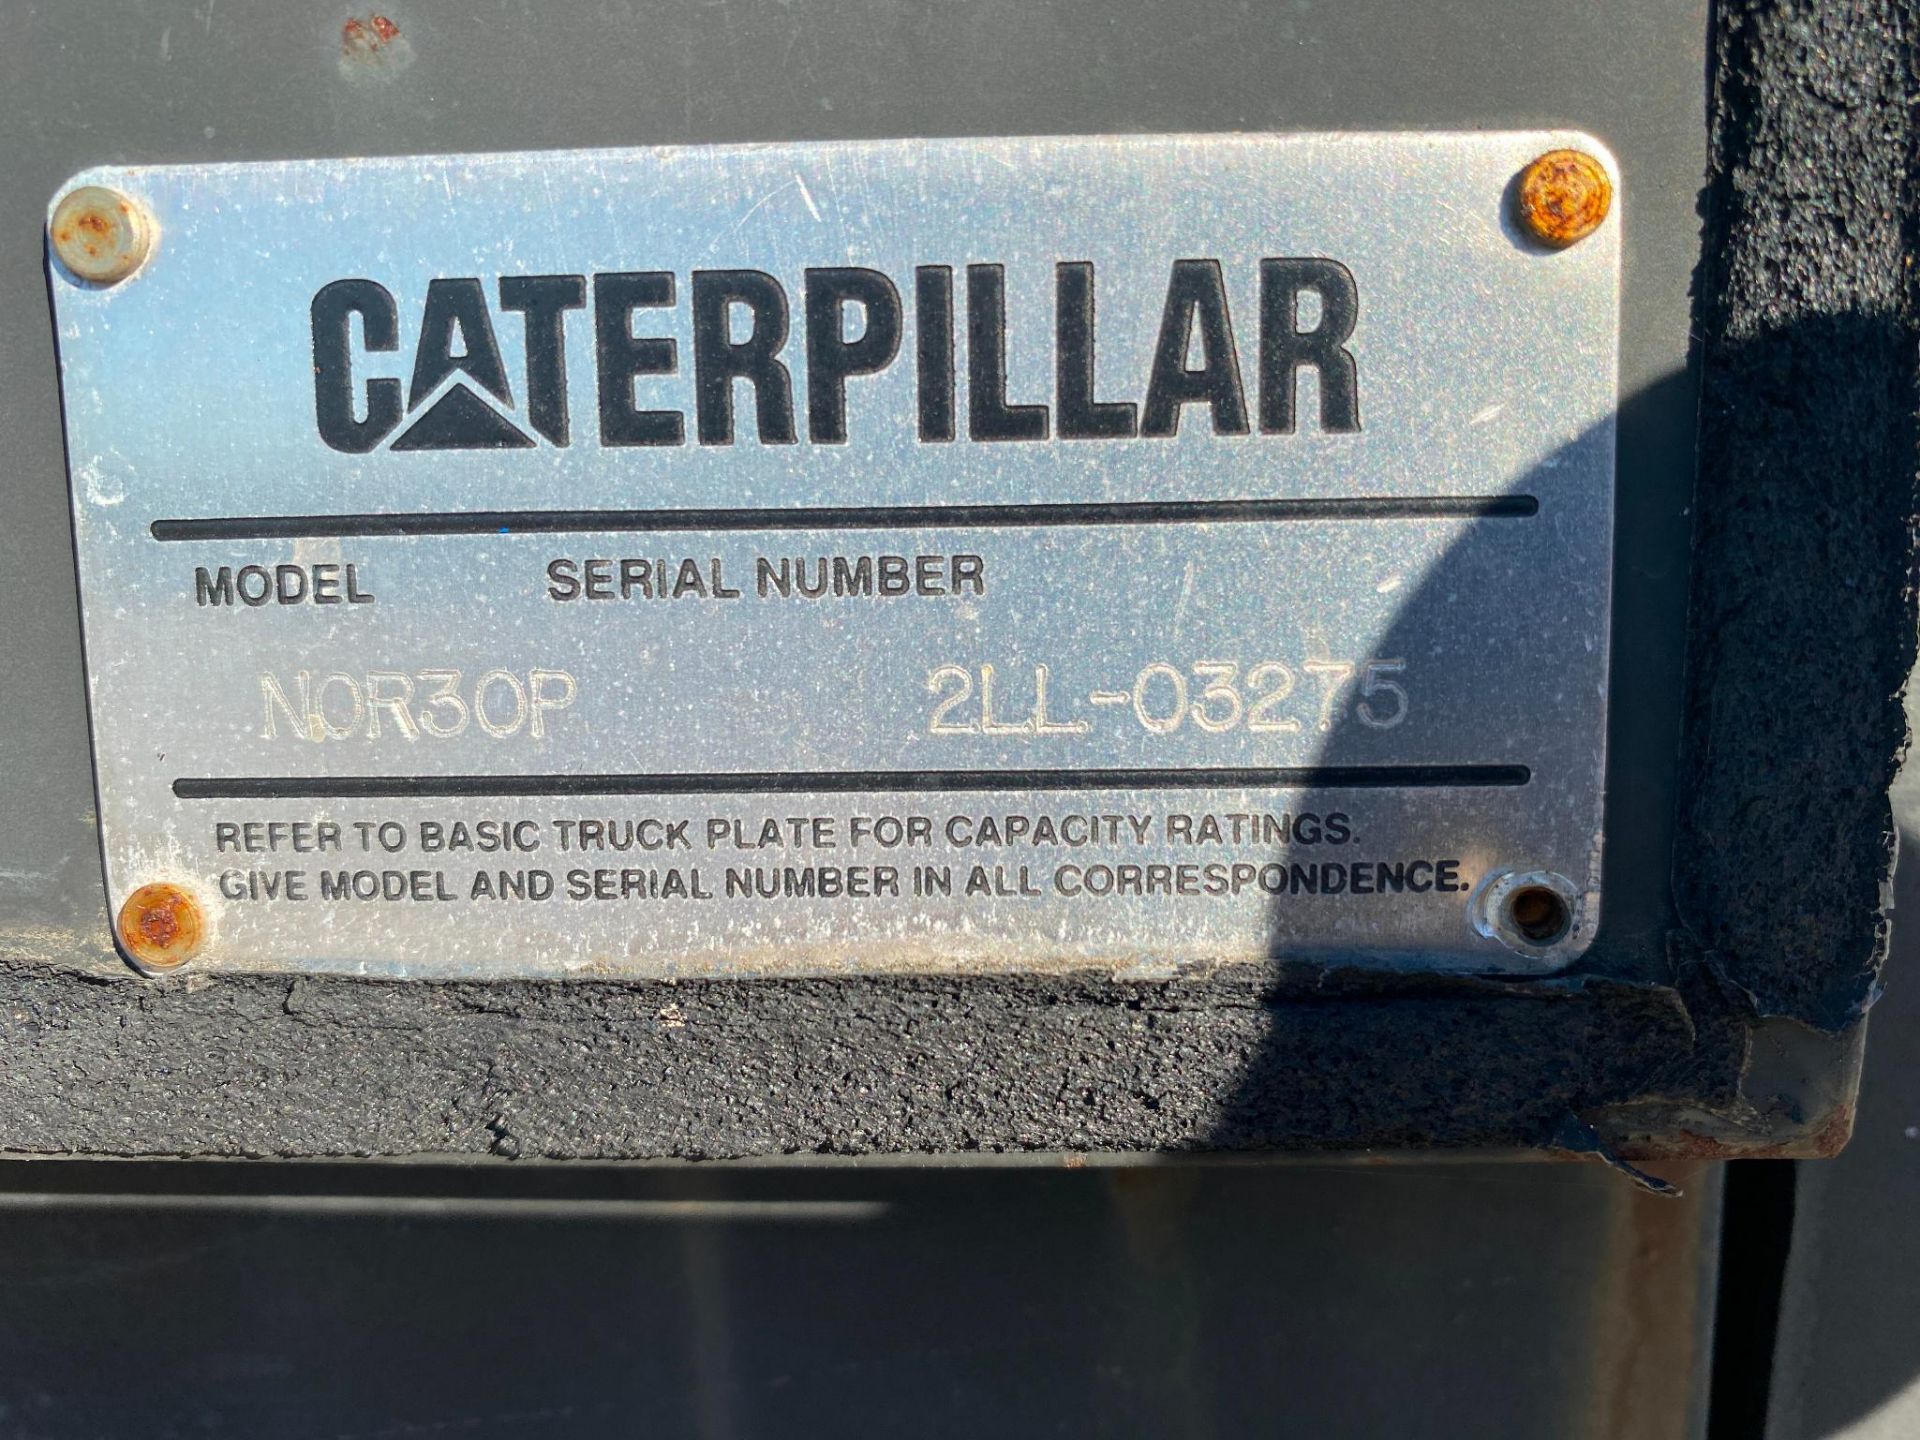 ELECTRIC ORDER PICKER, CATERPILLAR MDL. NOR30P, 3,000 lb. cap., S/N 2LL-03275 (needs repair, no - Image 4 of 6